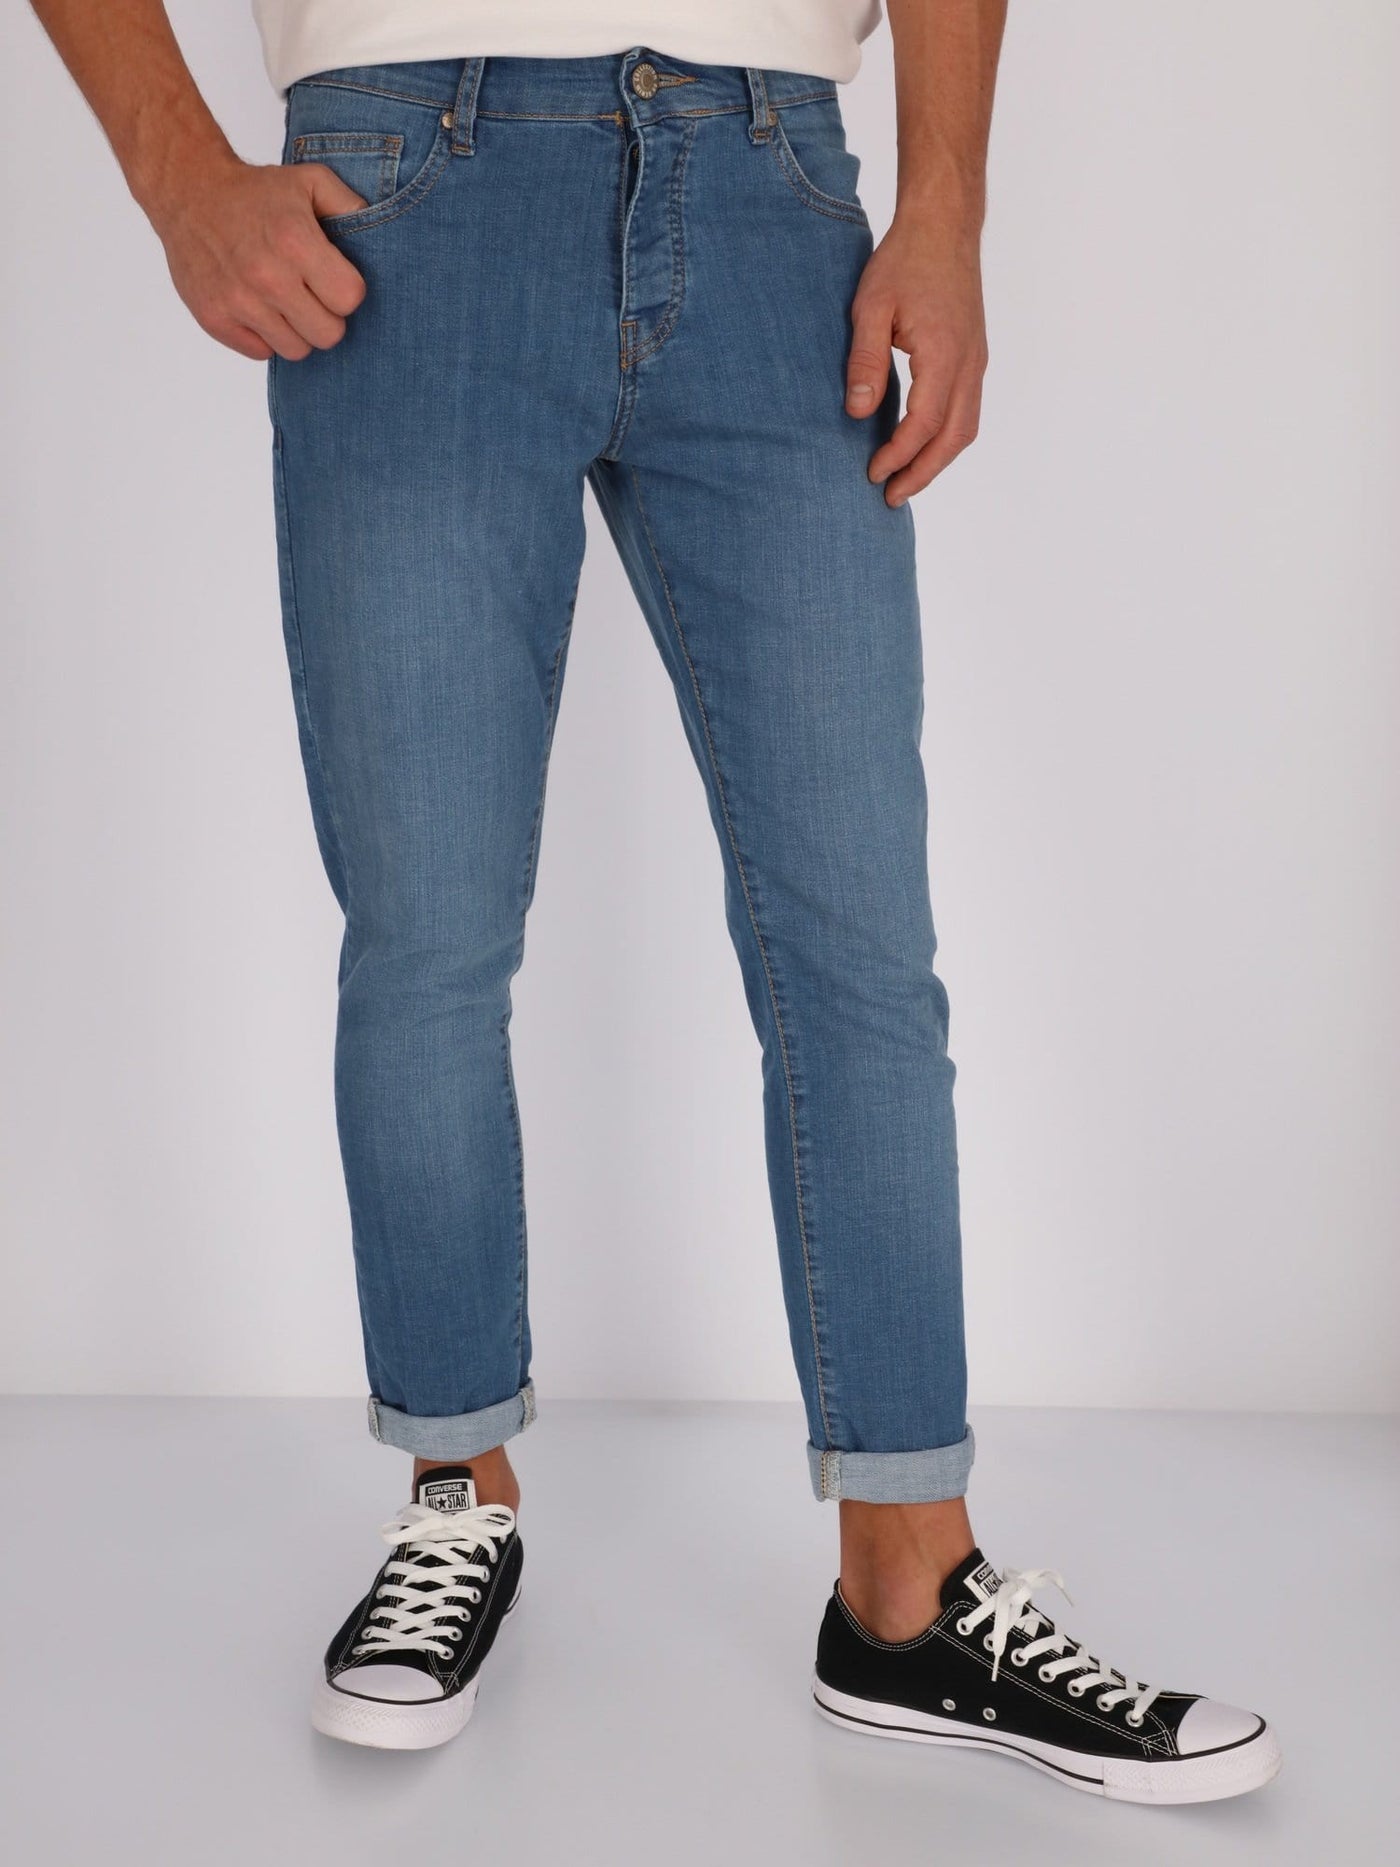 OR Pants & Shorts MR3 / 30 Slim Jeans Pants